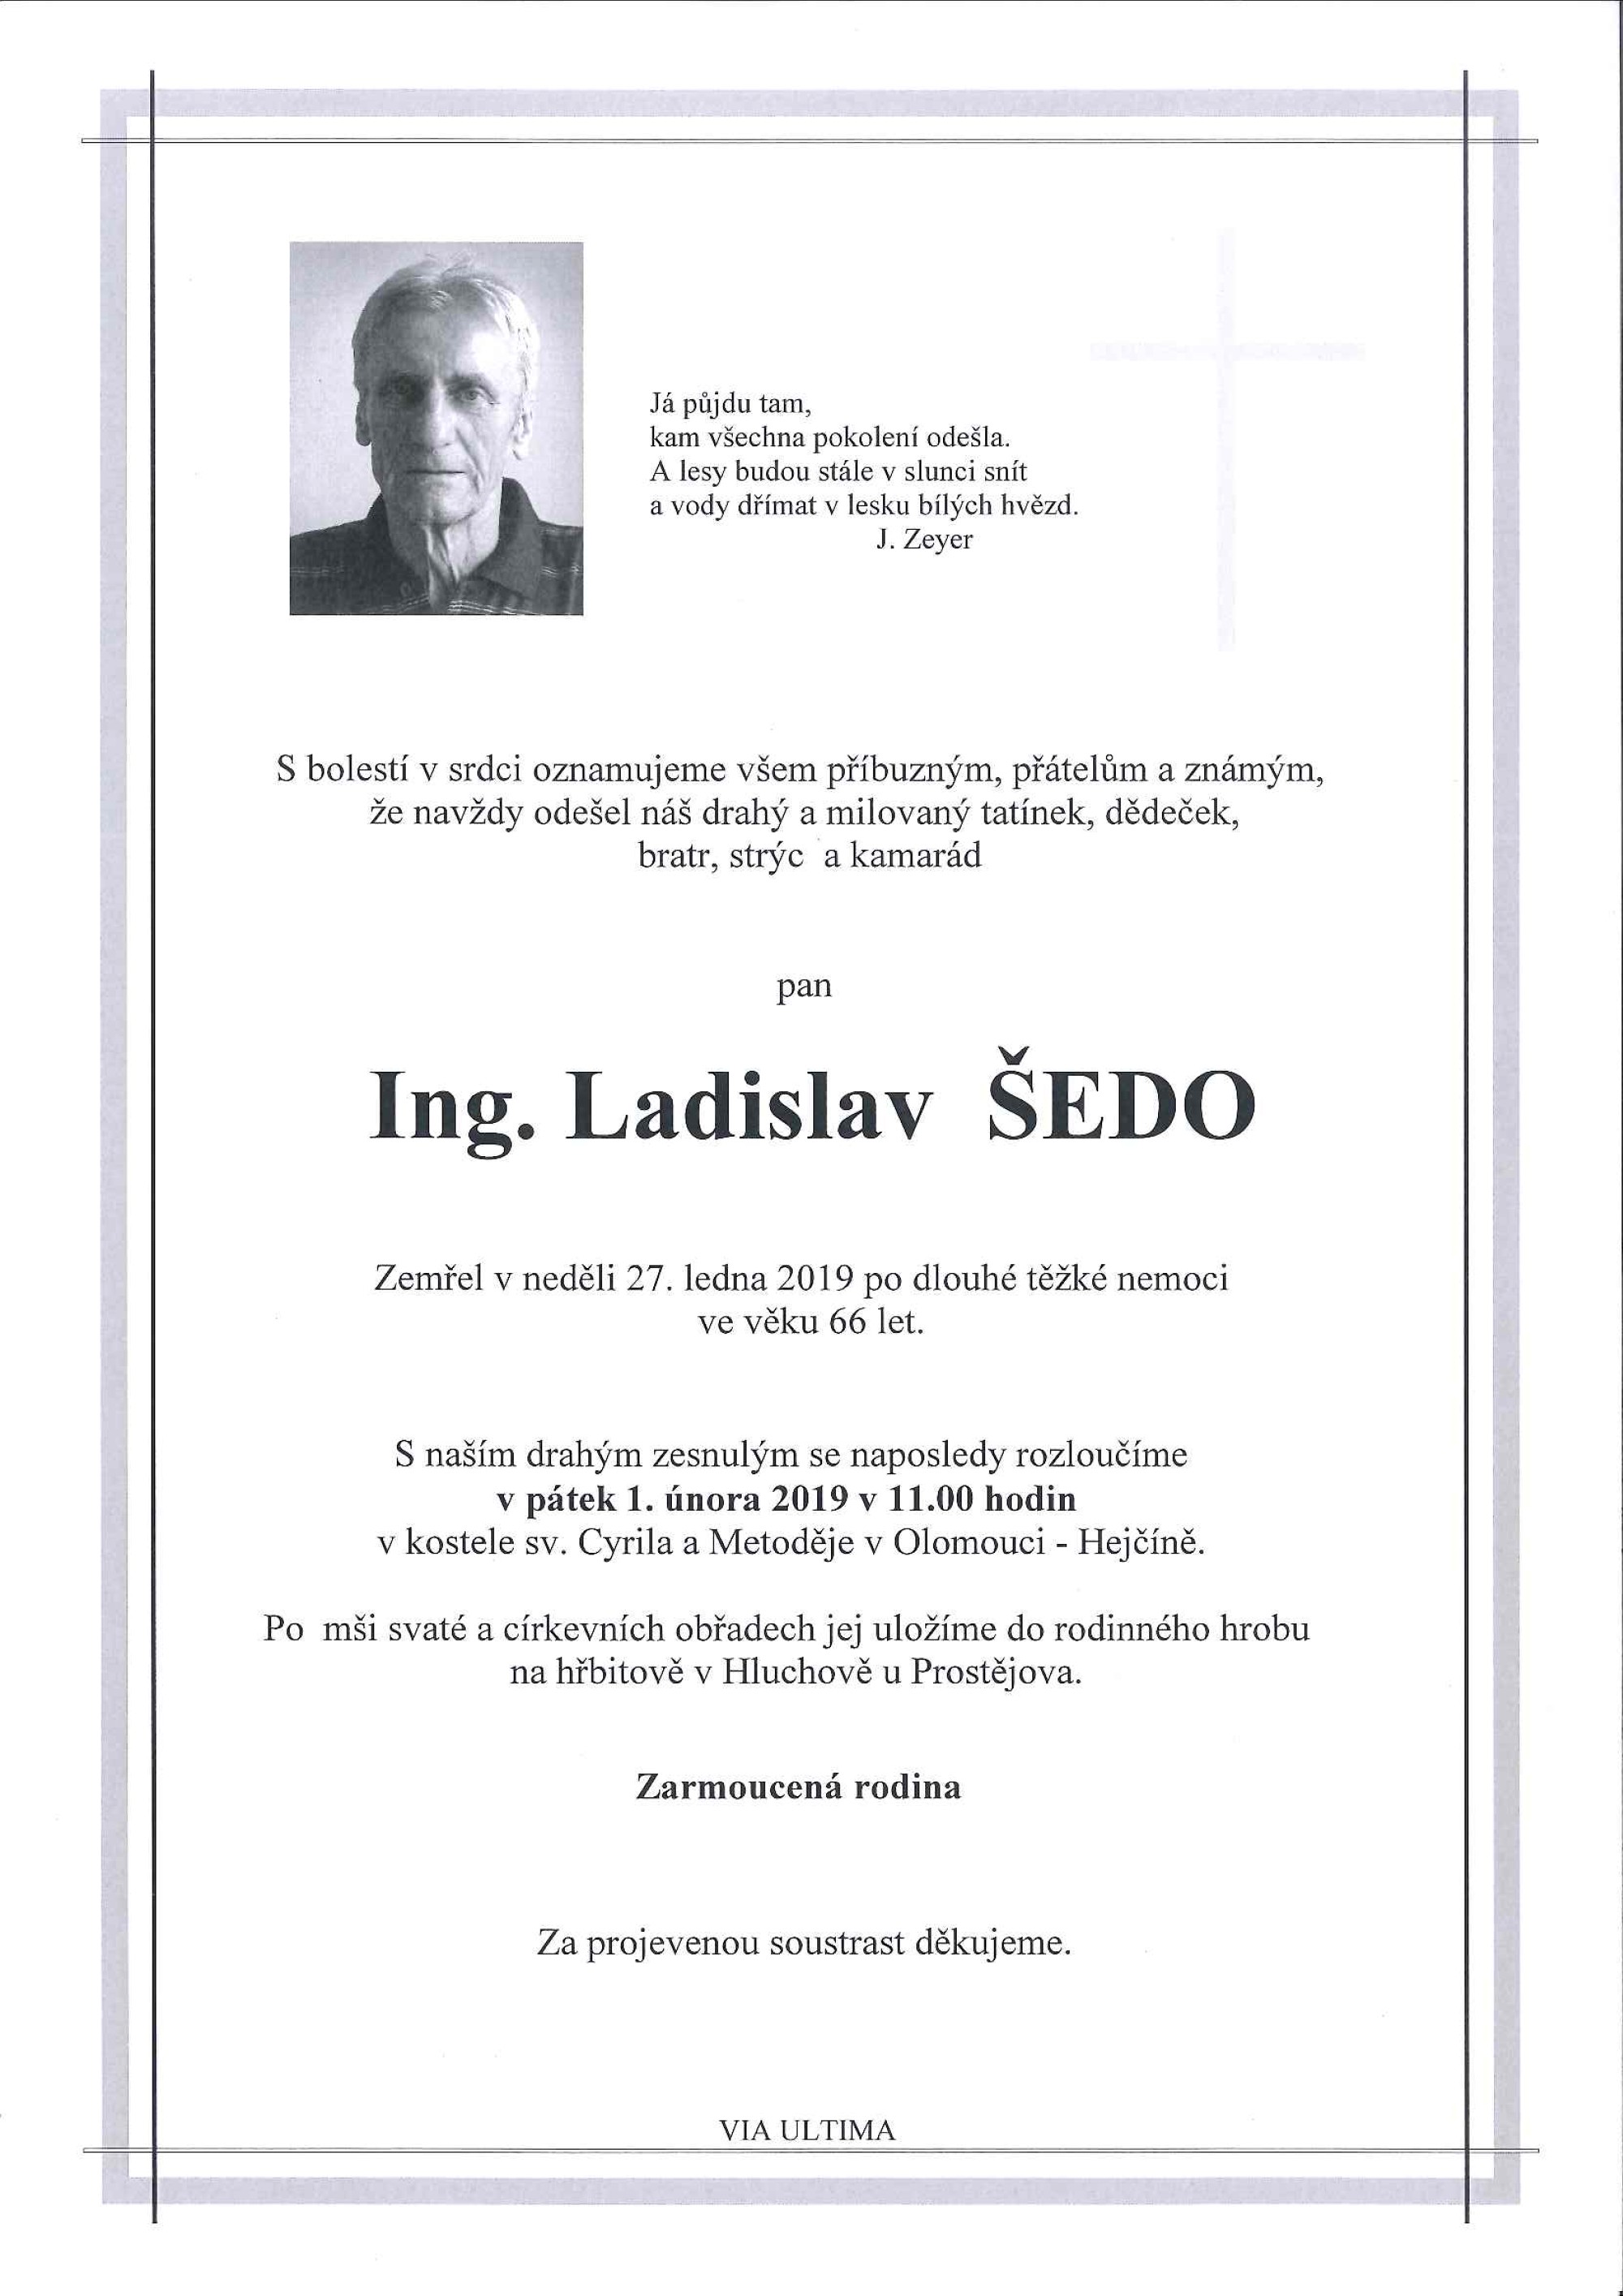 Ing. Ladislav Šedo